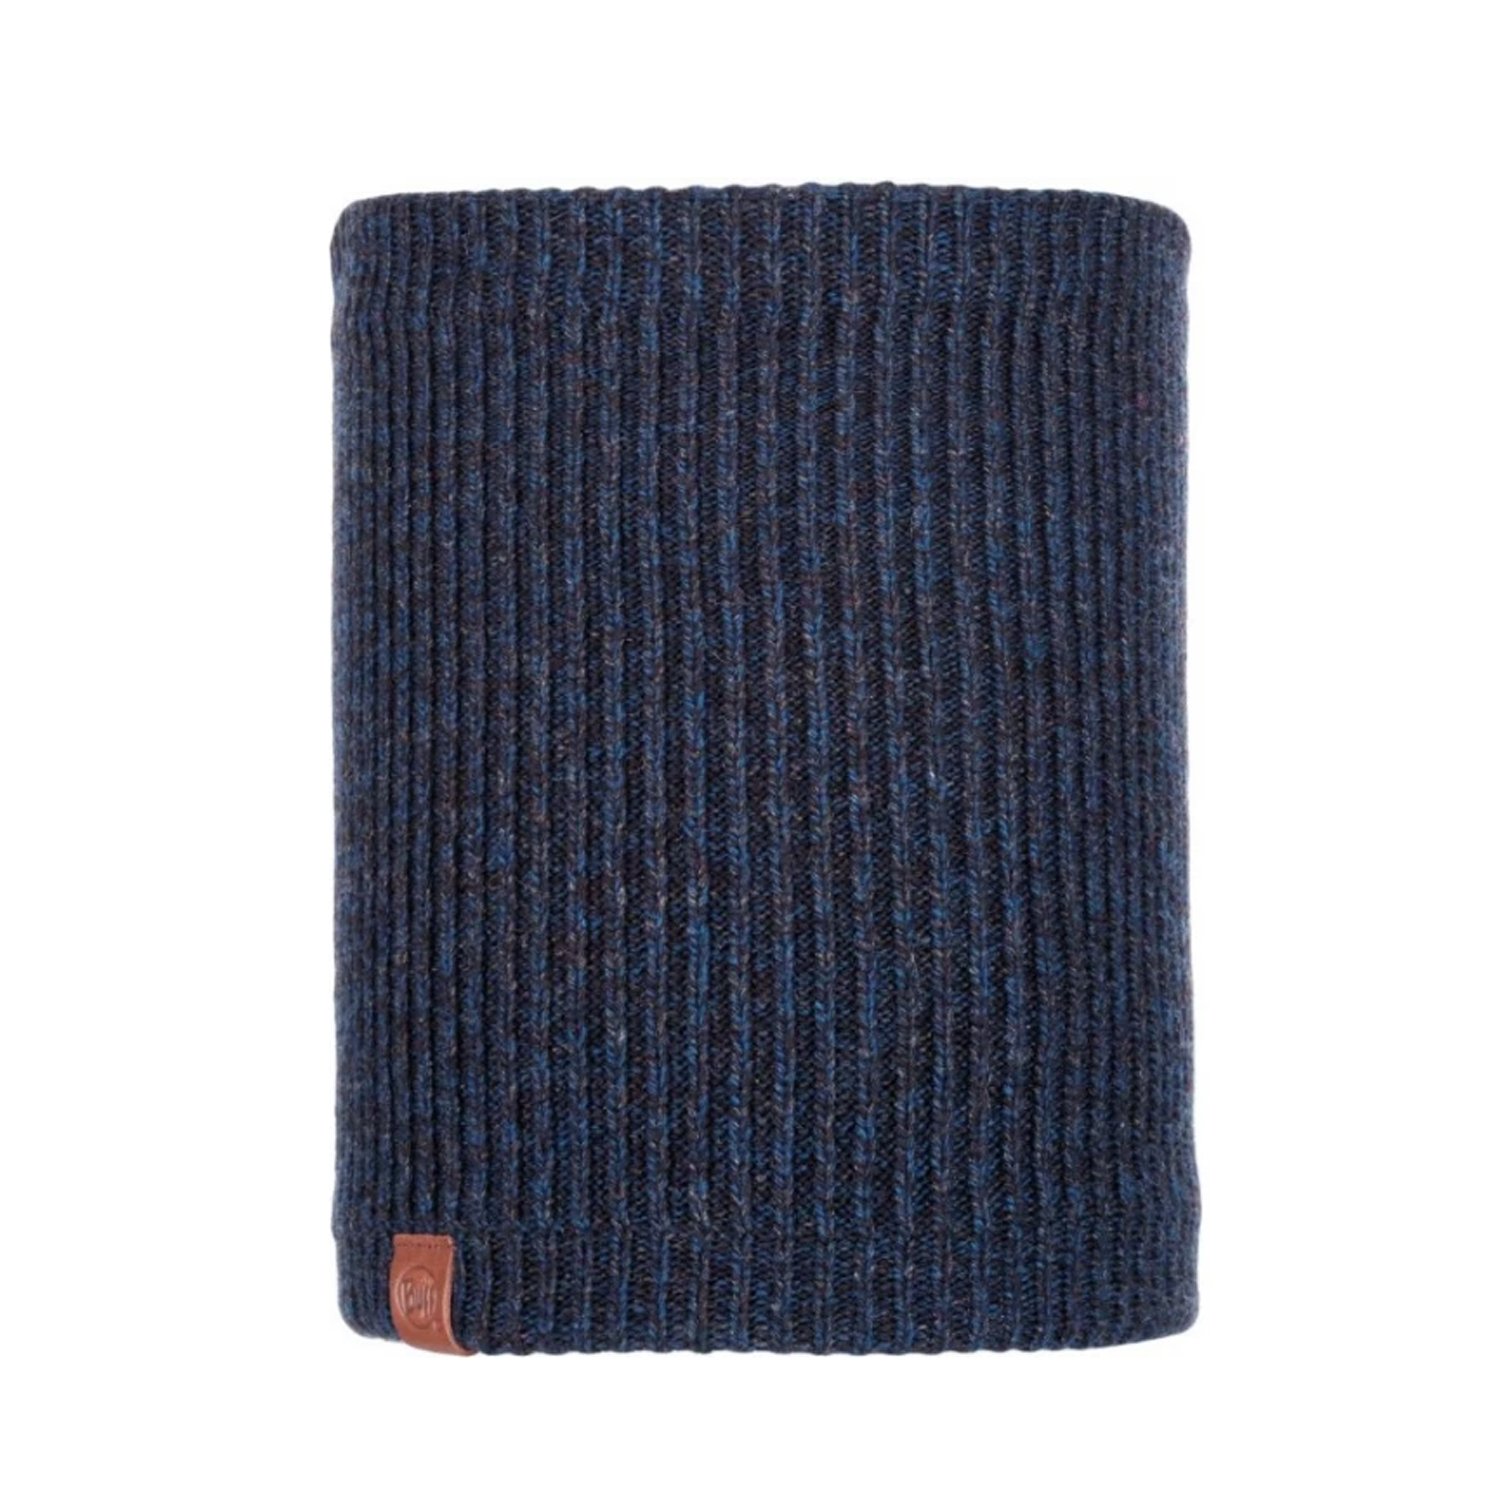 Шарф Buff Knitted & Fleece Neckwarmer Lan Lan Night, US:one size, синий, 126472.779.10.00